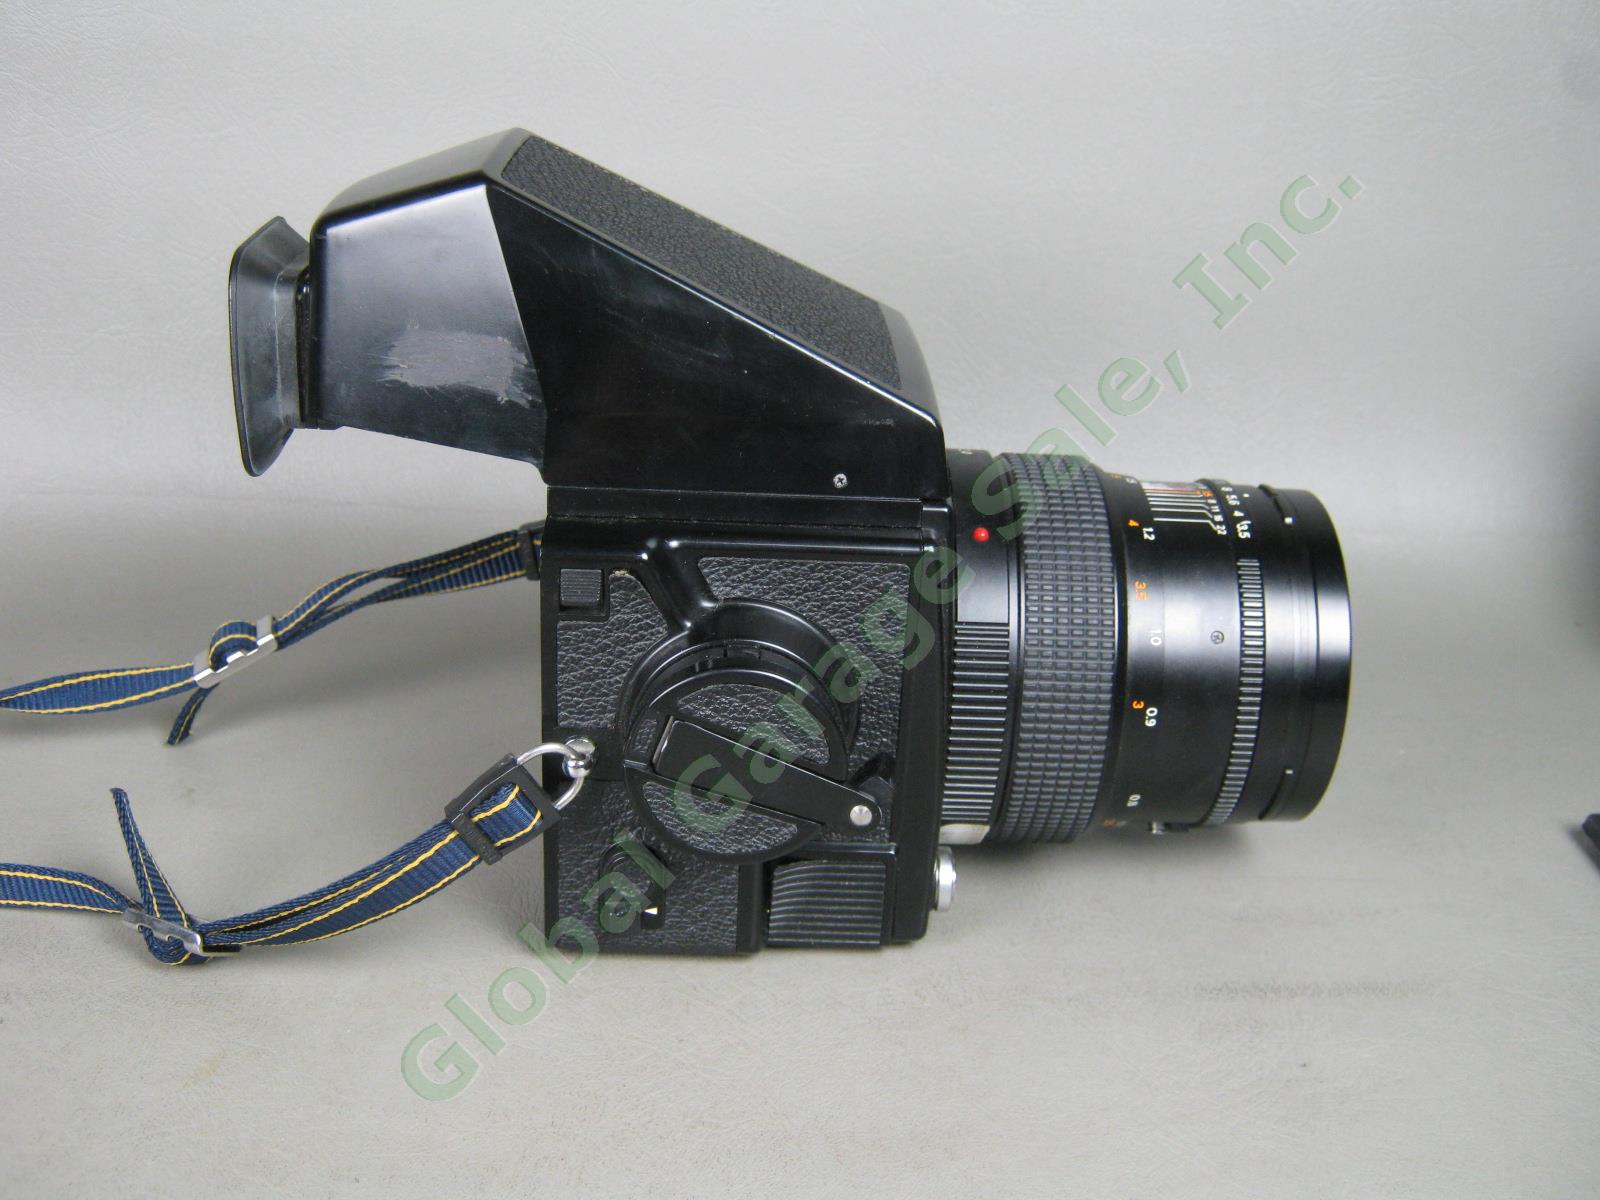 Bronica GS-1 6x7 Medium Format Camera Zenzanon-PG 100mm Lens Backs Grip Bundle 3